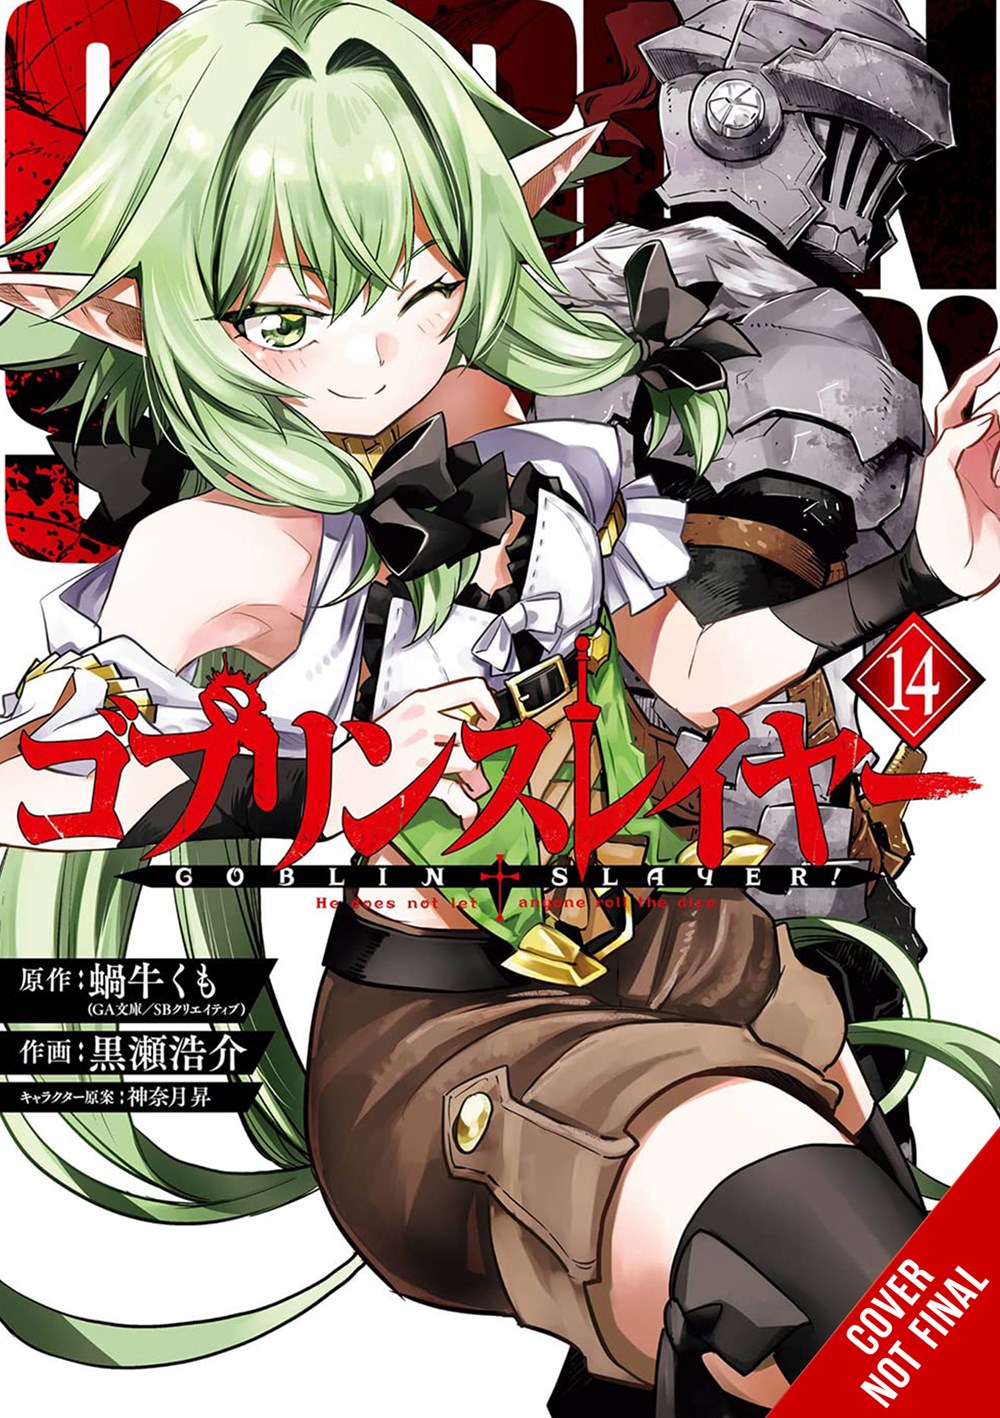 Goblin Slayer Manga Reviews